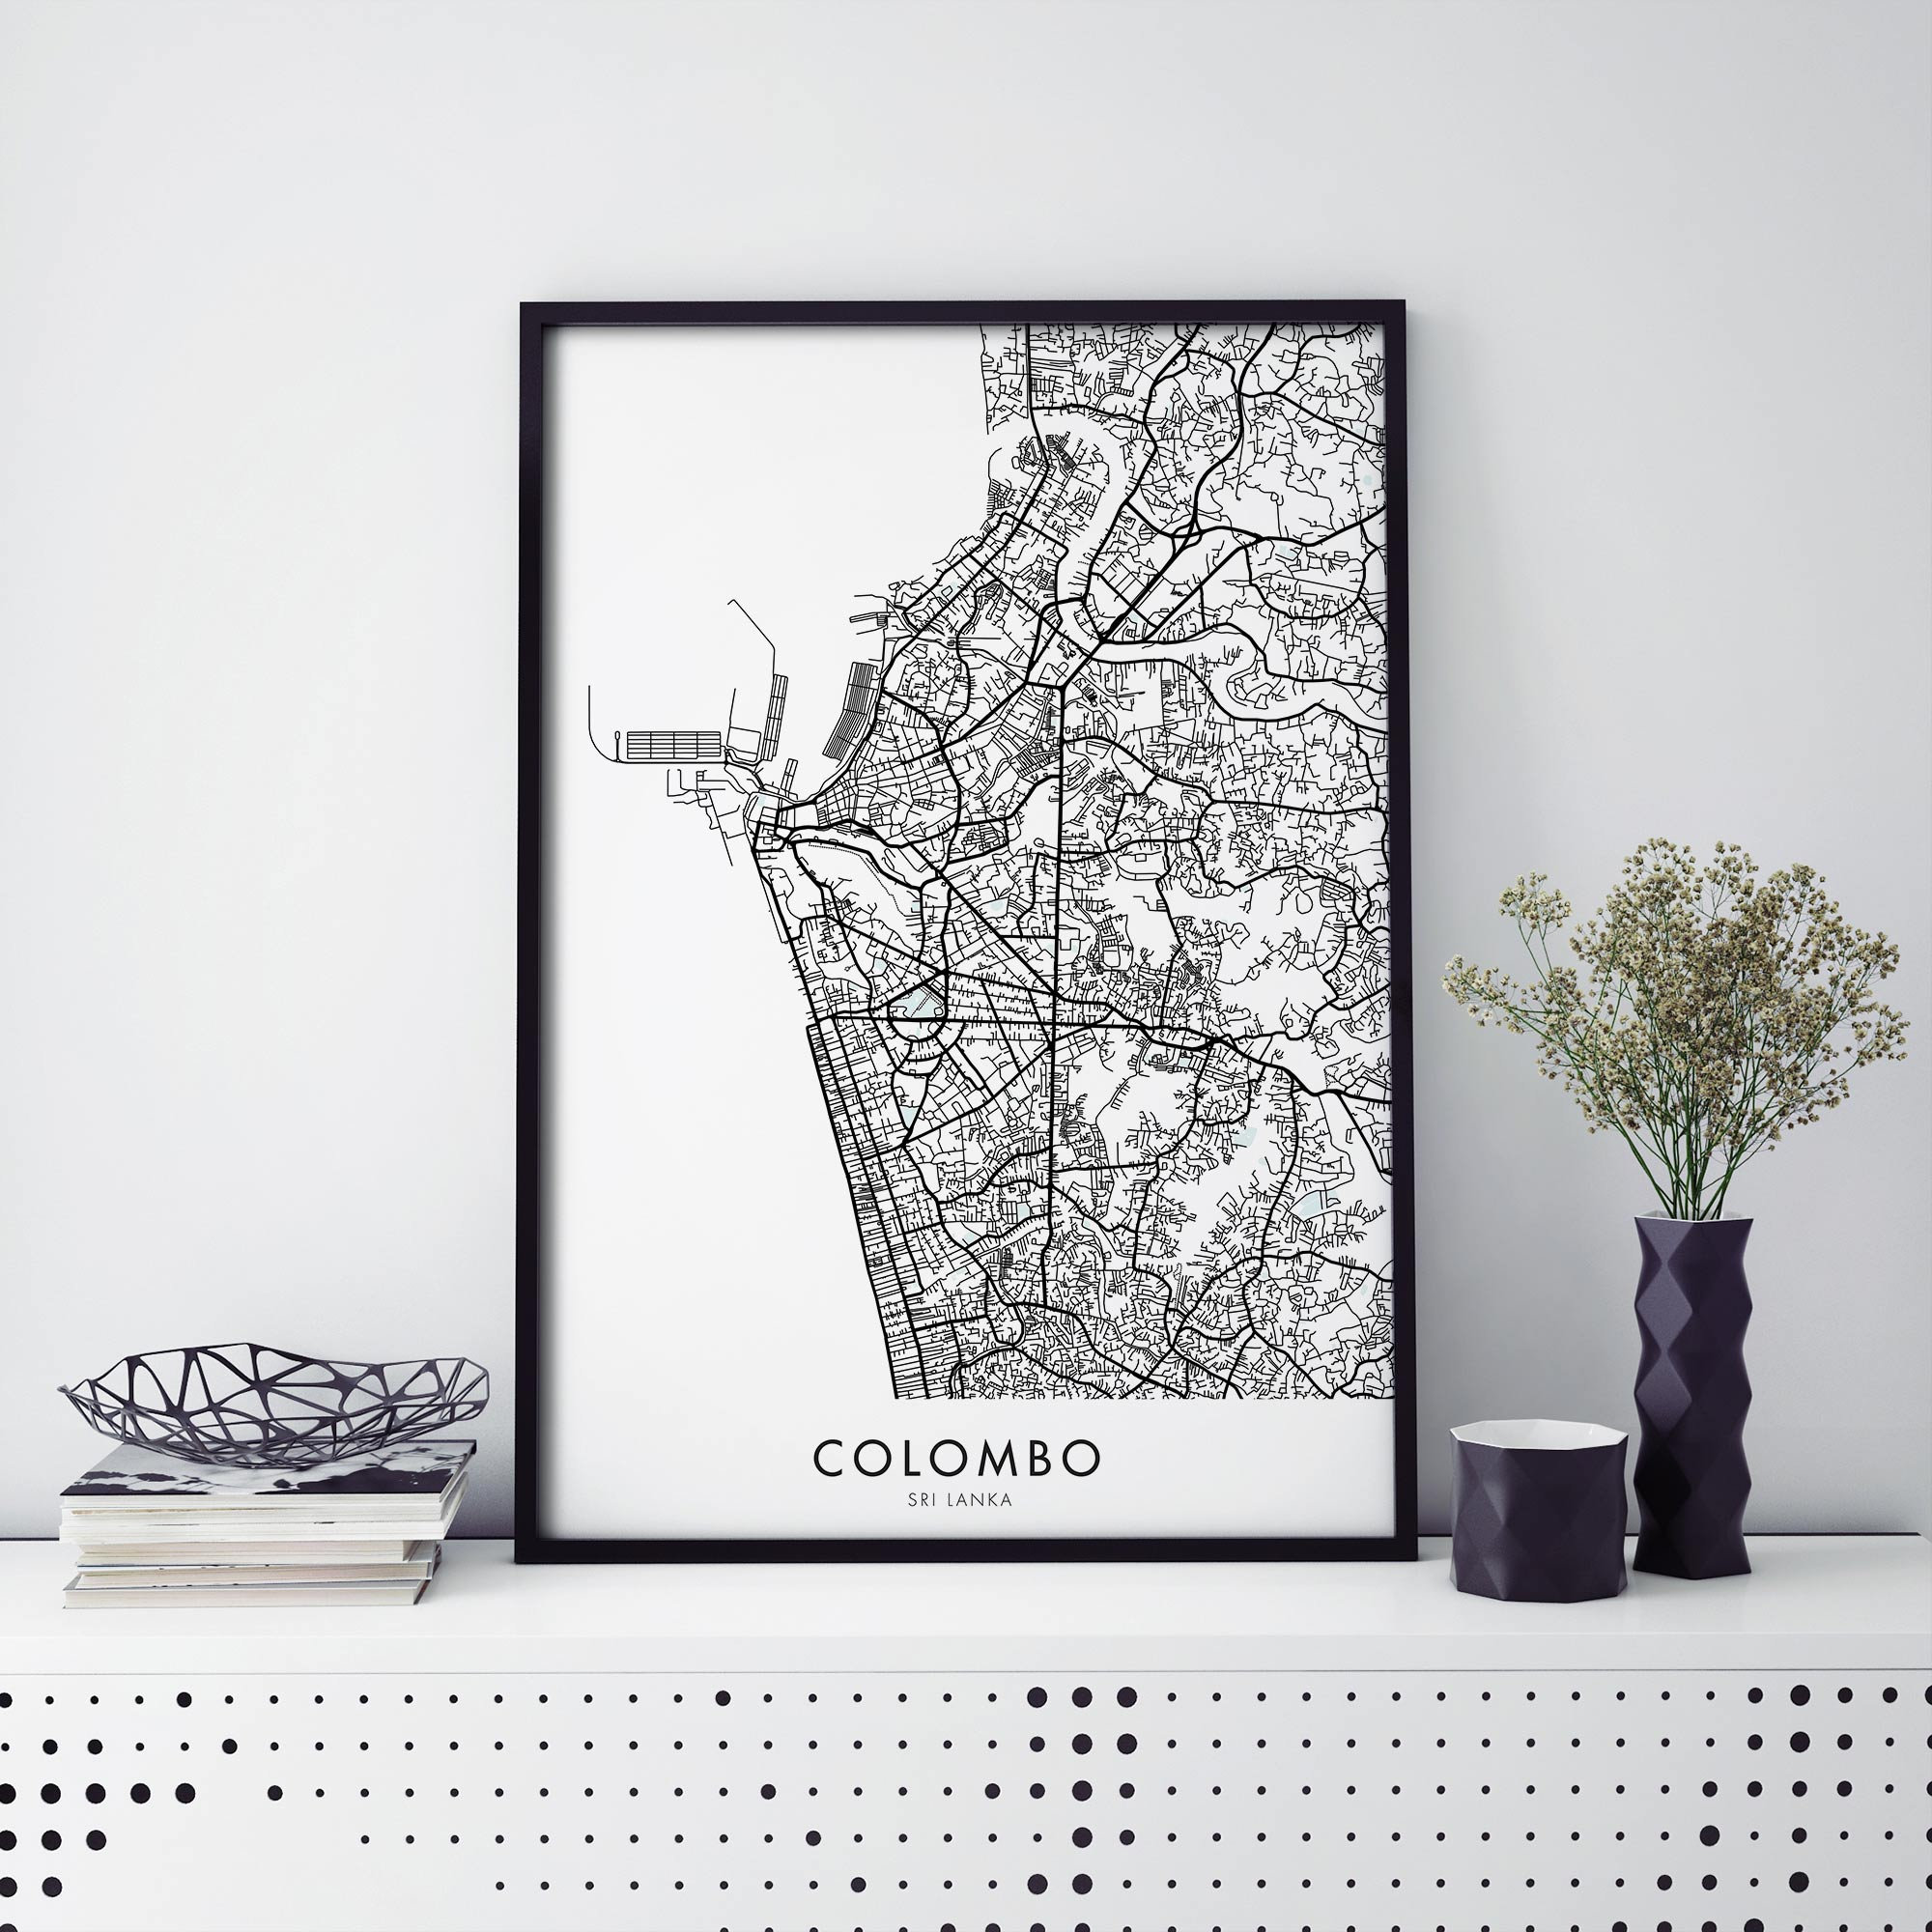 Colombo Sri Lanka Art City Map Print Wall Art A4 A3 A2 A1